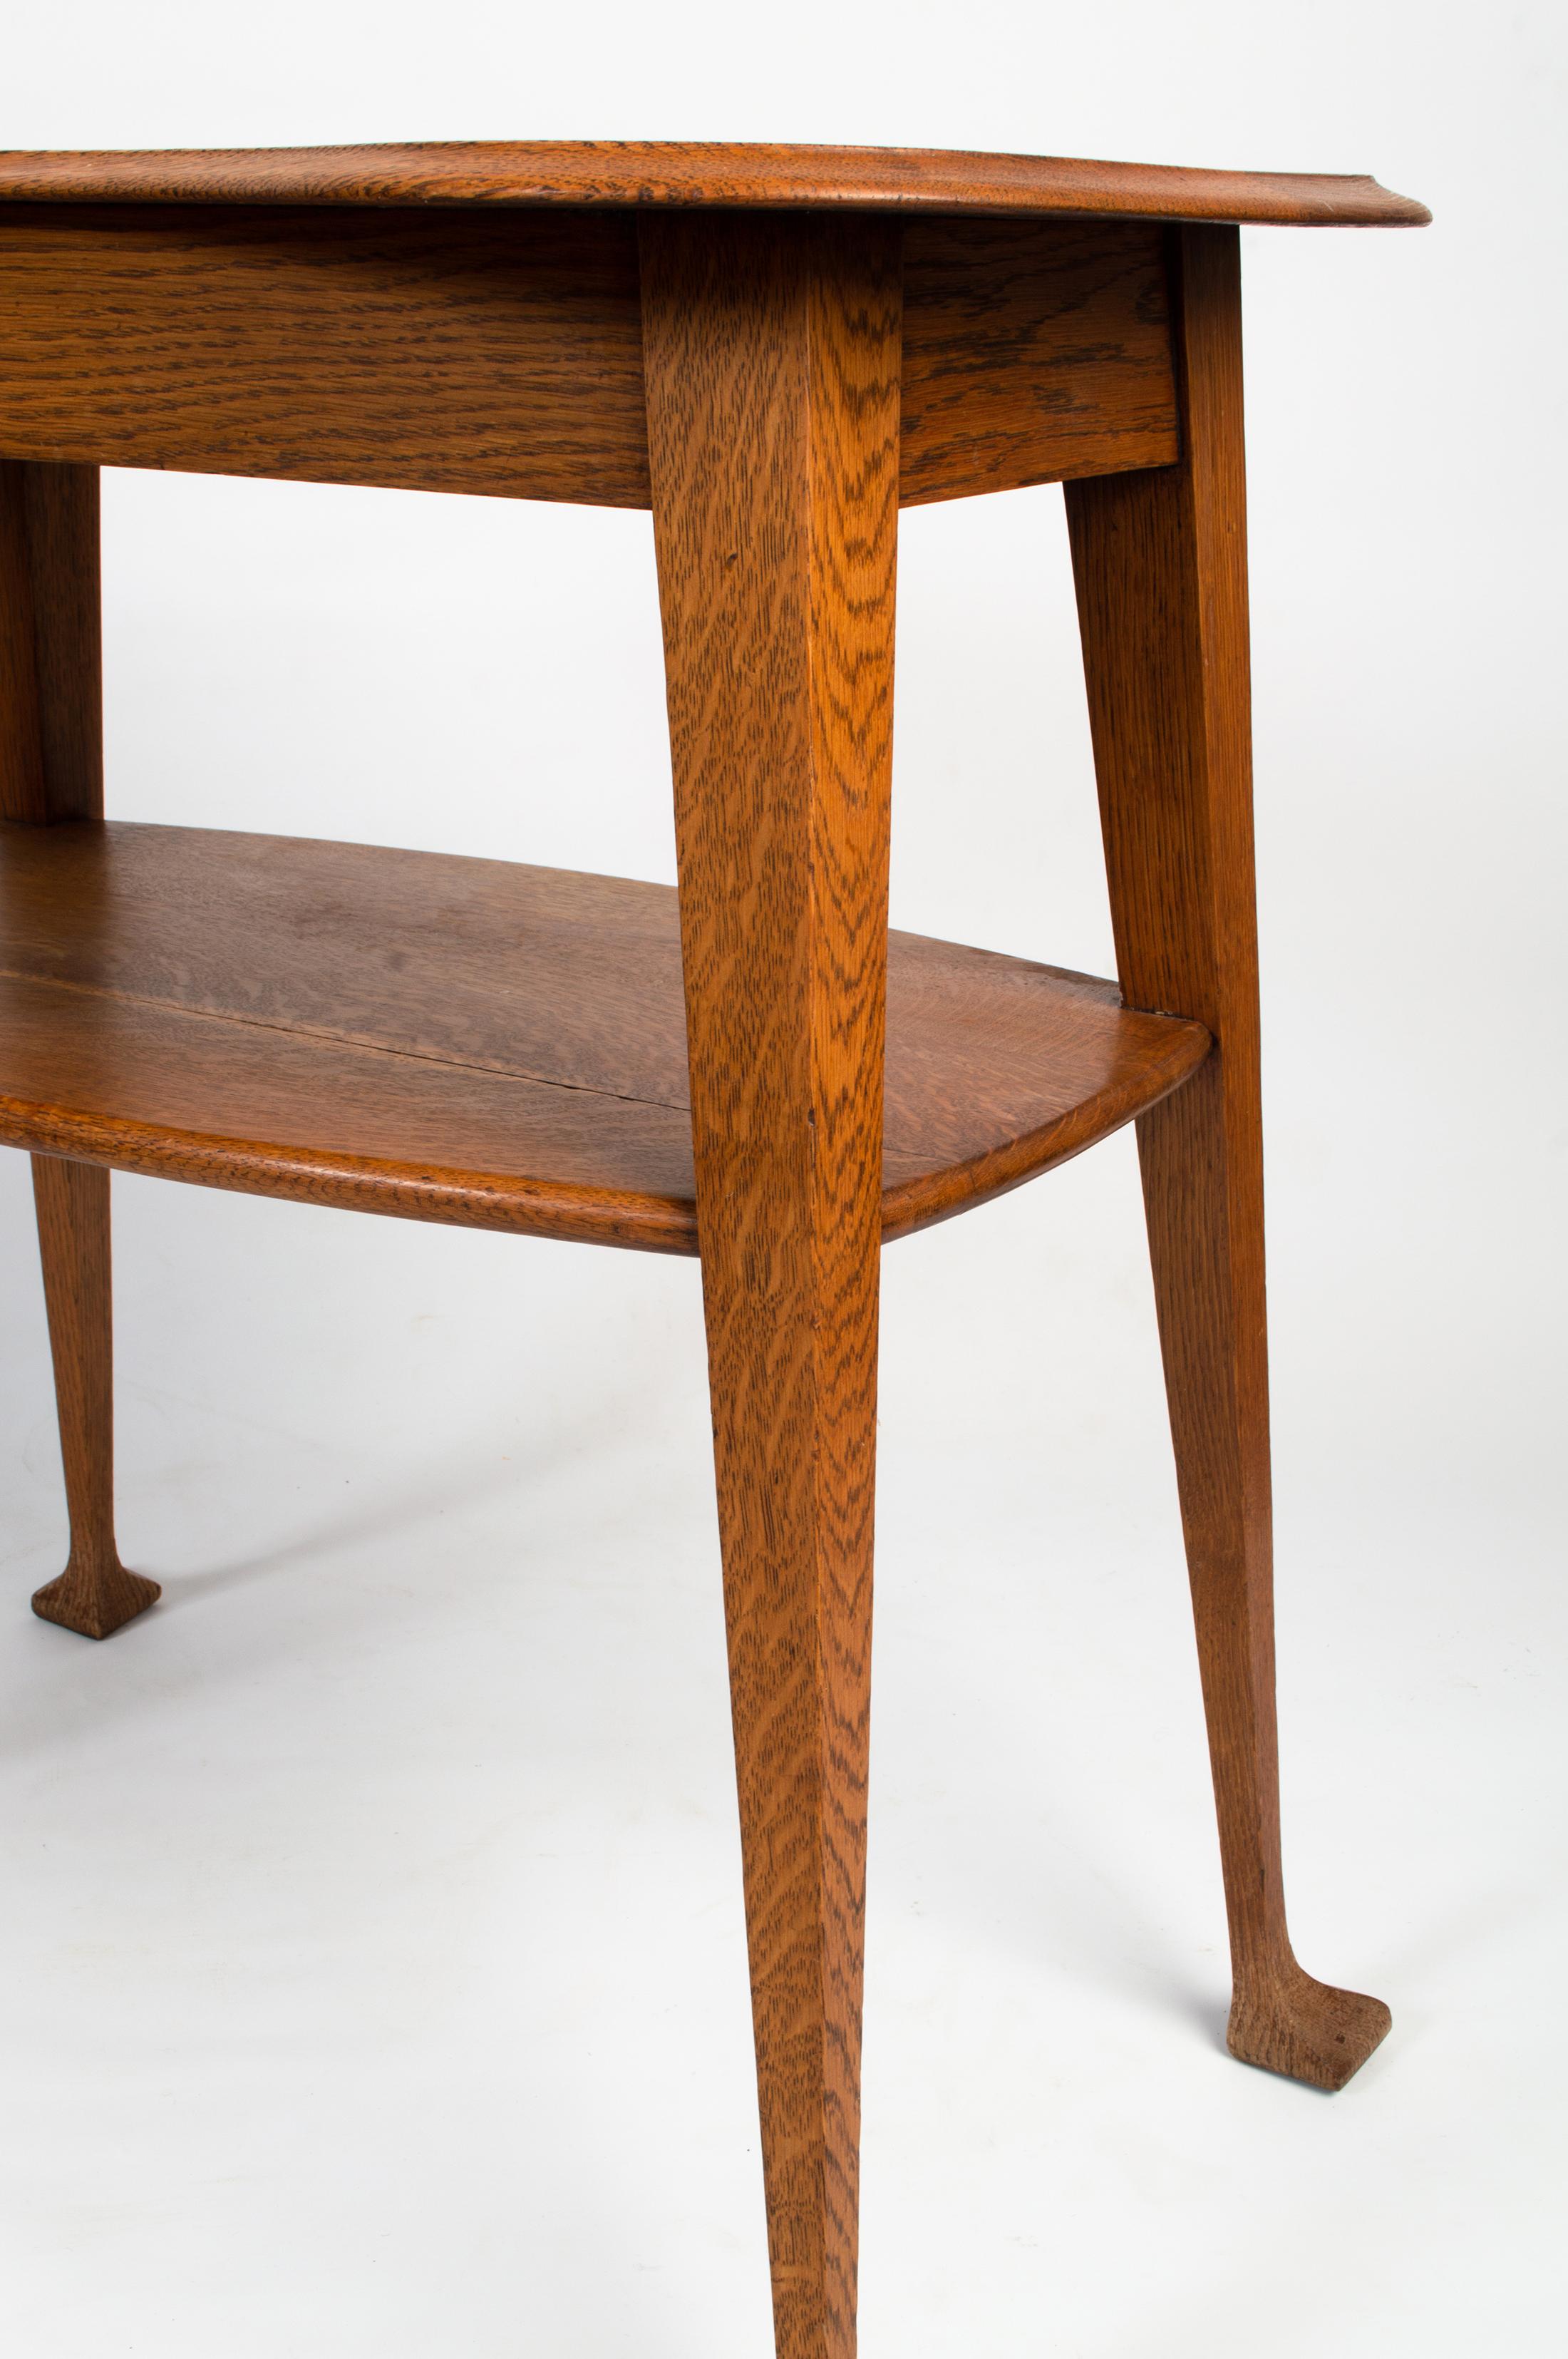 Antique English Shapland & Petter Arts & Crafts Golden Oak Side Table C.1890 For Sale 3